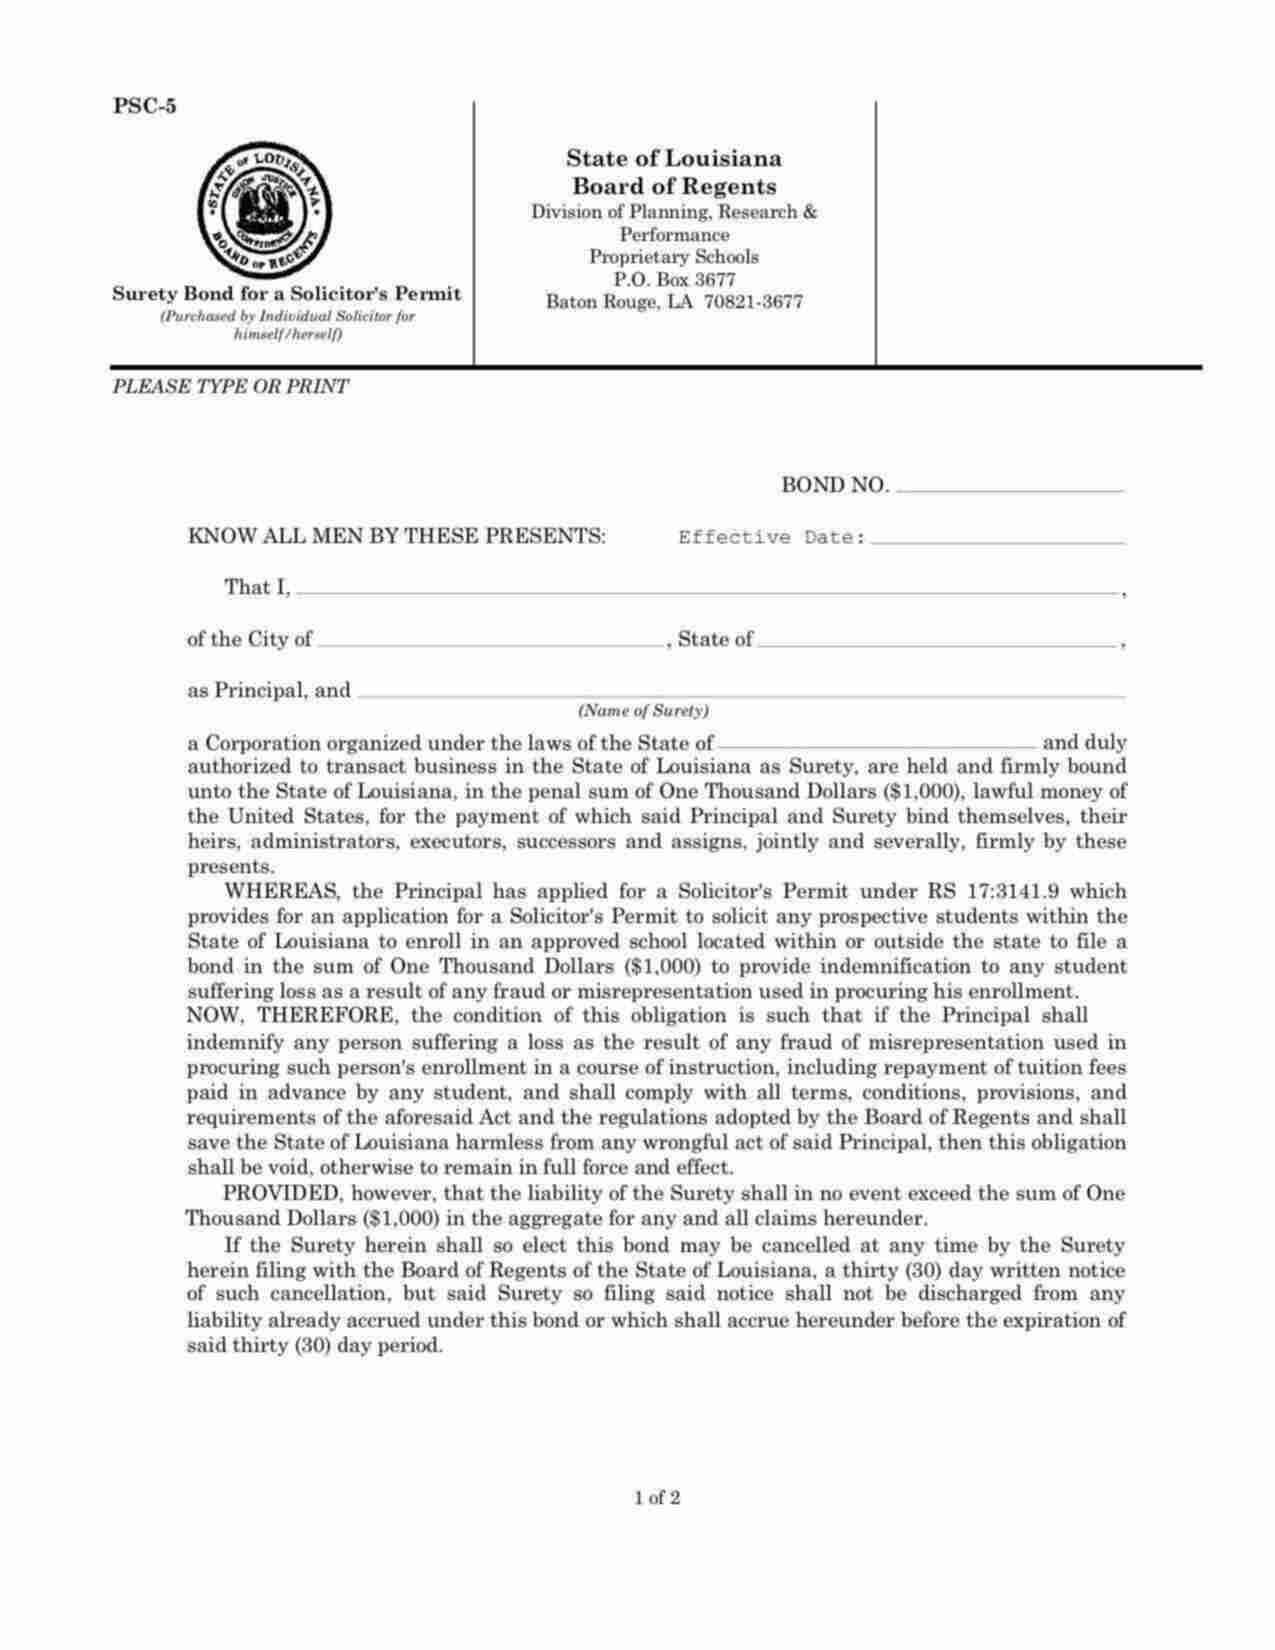 Louisiana Proprietary Schools - Solicitor's Permit Bond Form